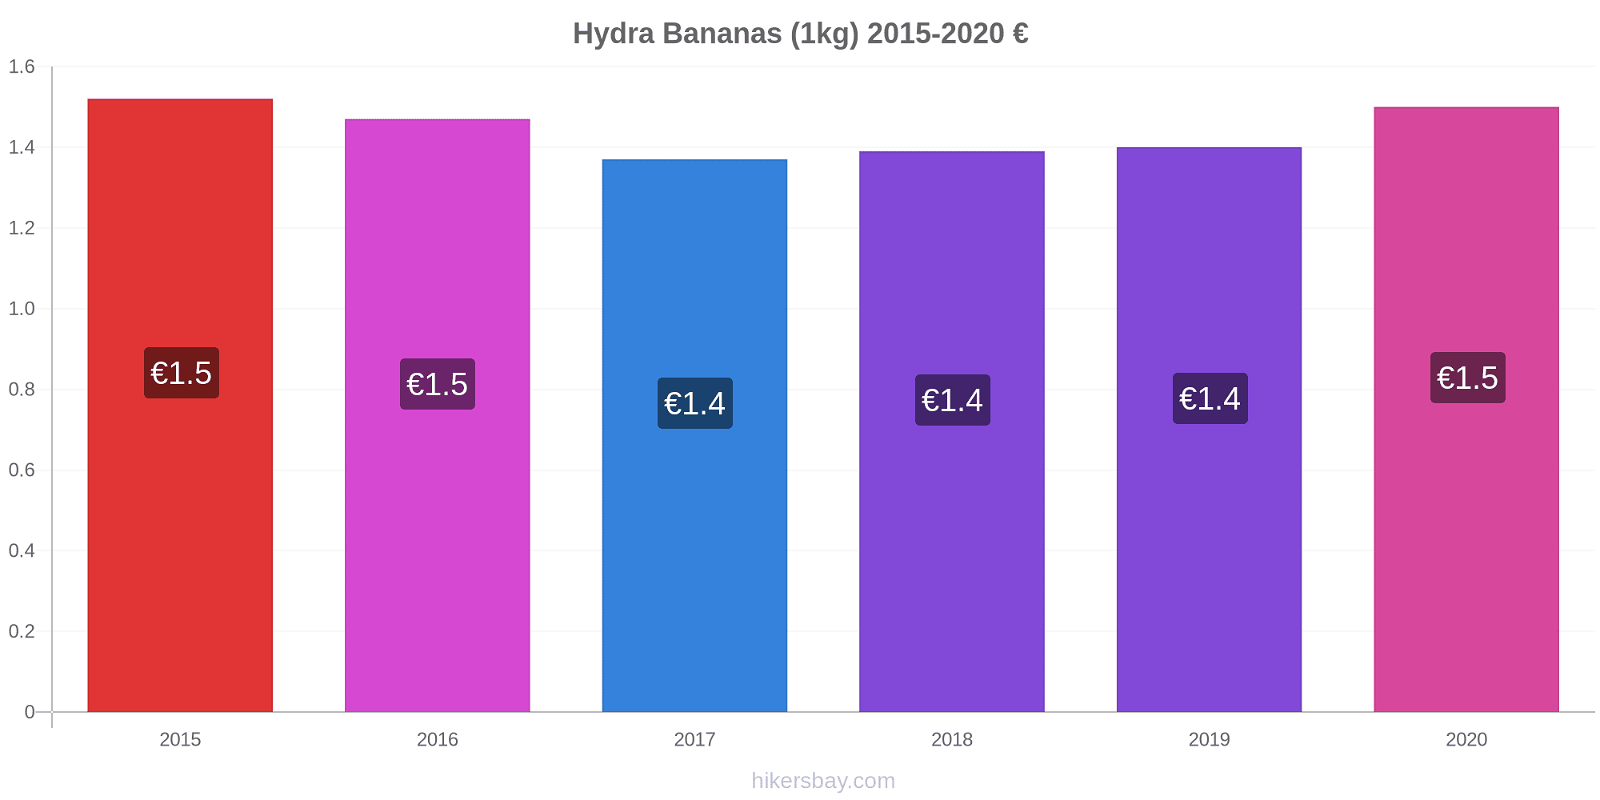 Hydra price changes Bananas (1kg) hikersbay.com